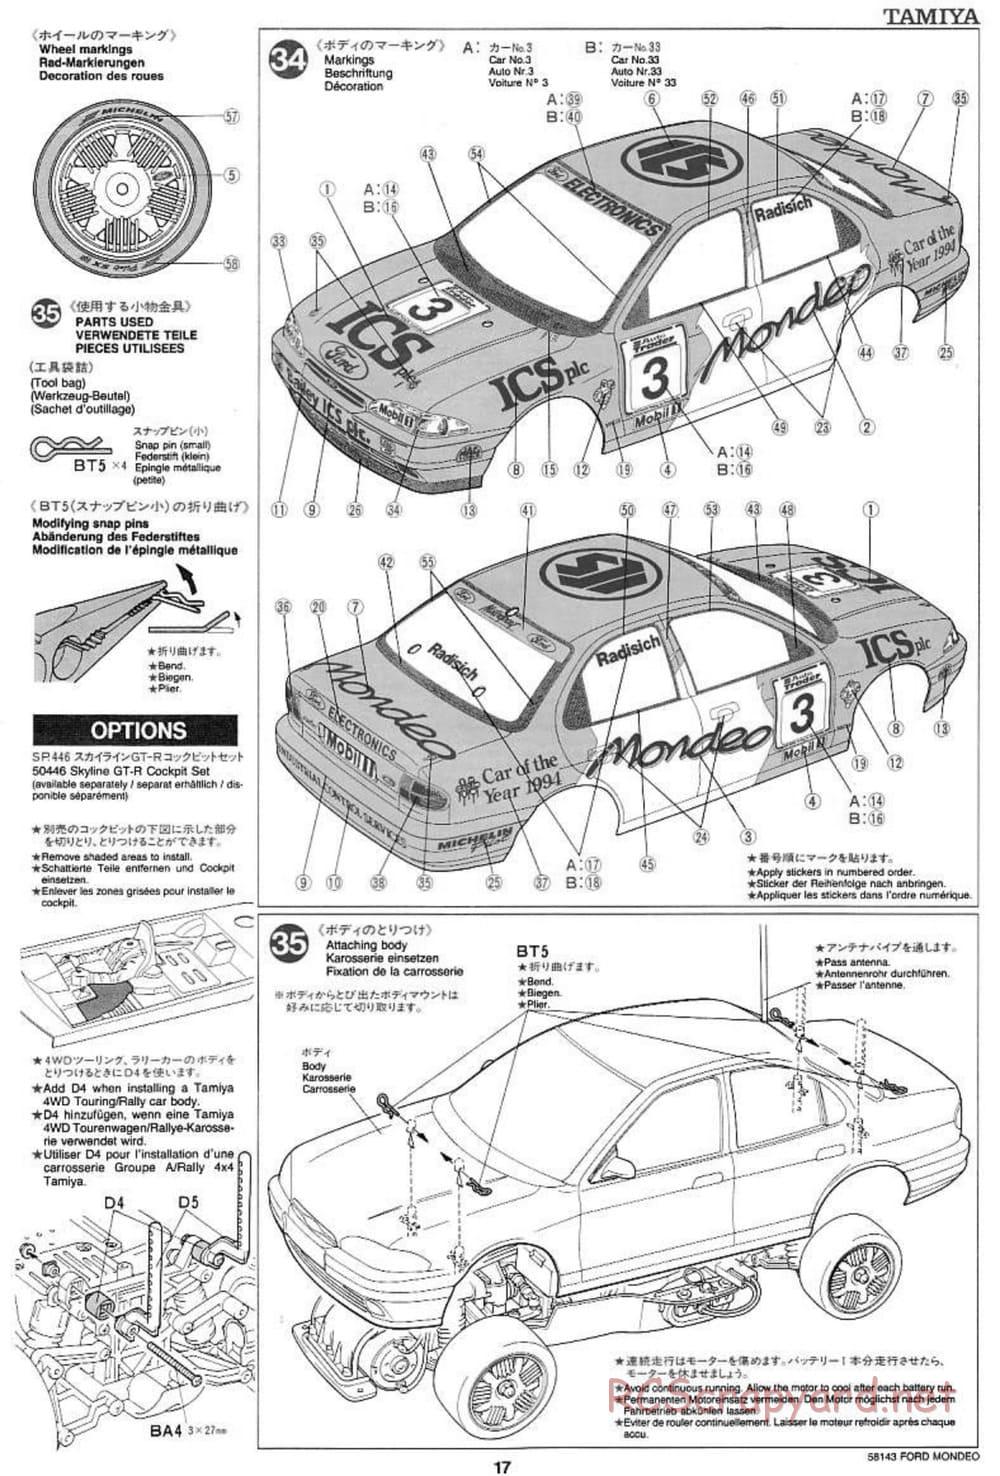 Tamiya - Ford Mondeo BTCC - FF-01 Chassis - Manual - Page 17